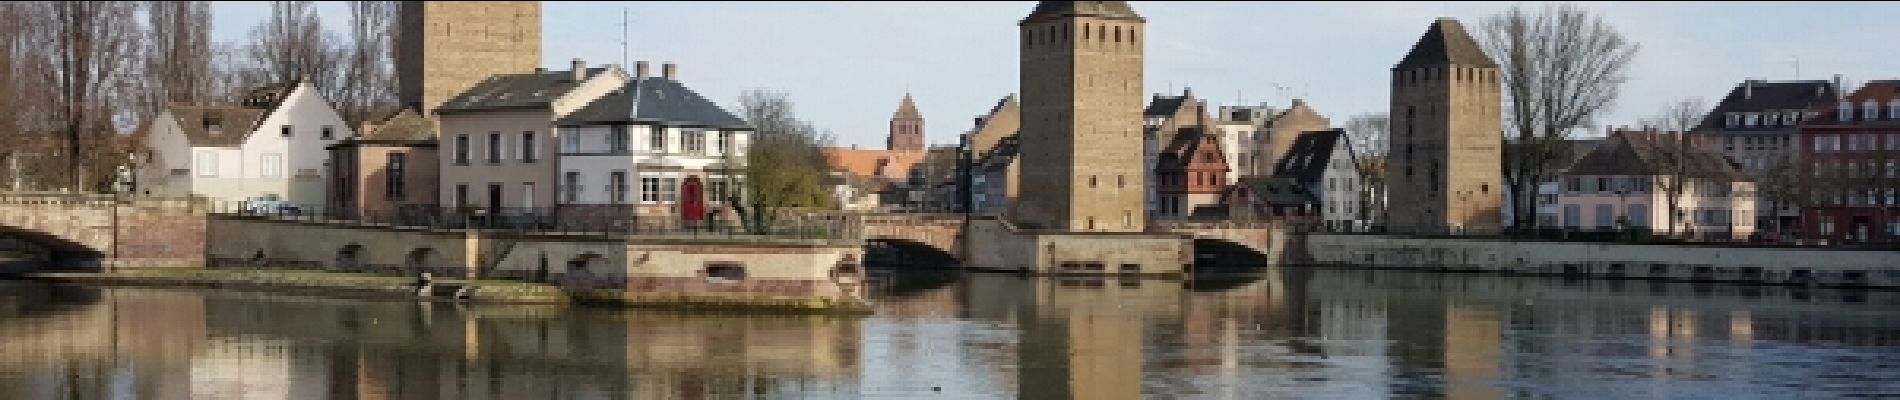 Point d'intérêt Strasbourg - Point 8 - Photo